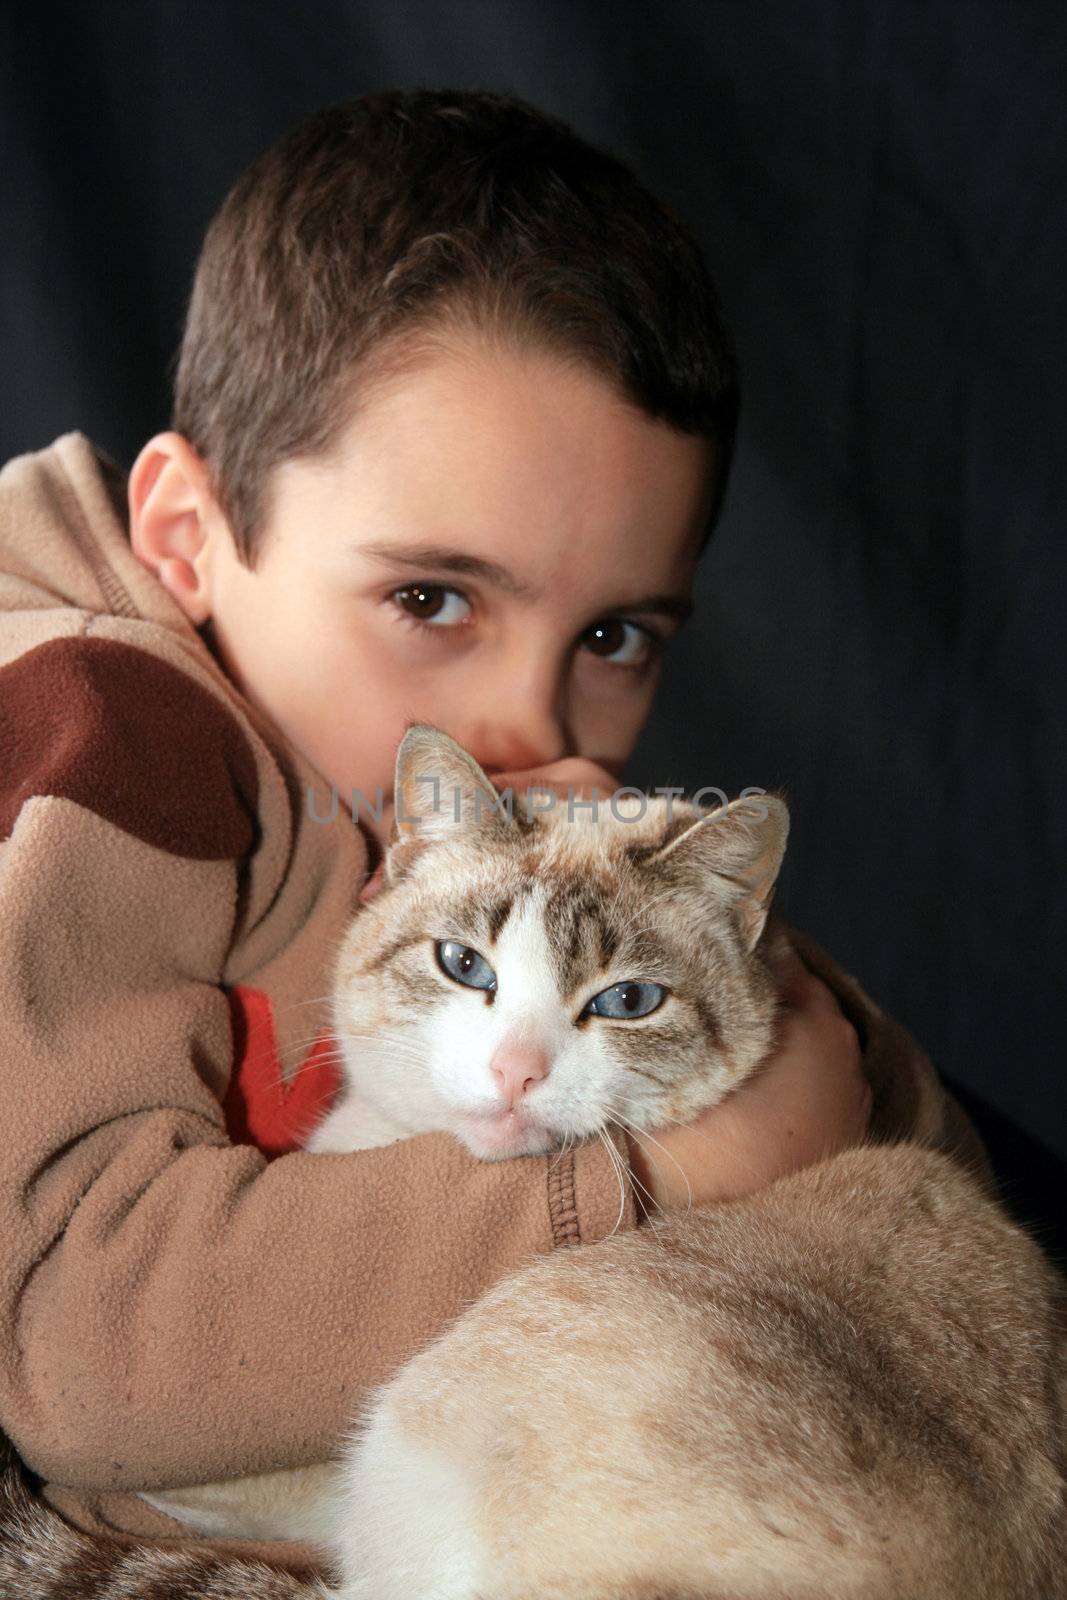 boy with cat by jpcasais